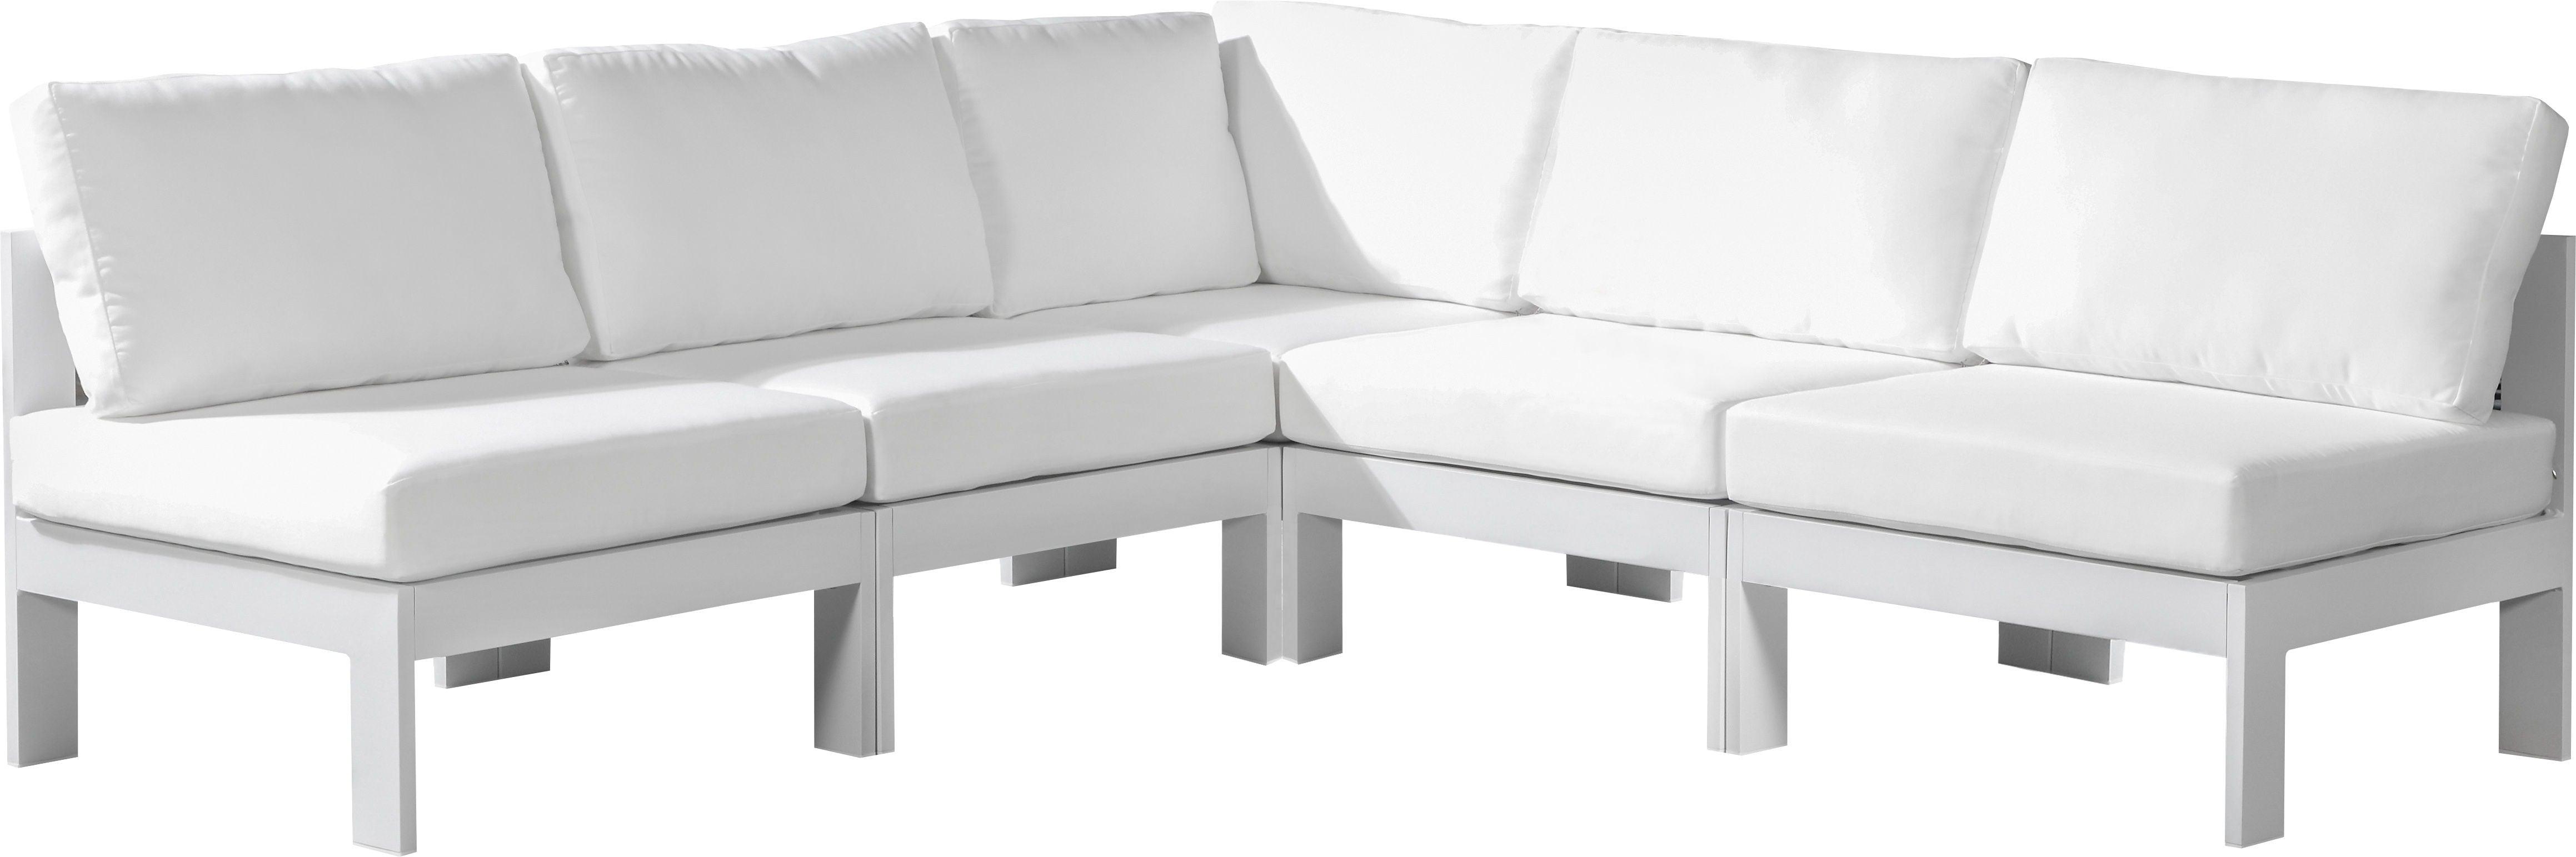 Meridian Furniture - Nizuc - Outdoor Patio Modular Sectional 5 Piece - White - Fabric - Modern & Contemporary - 5th Avenue Furniture